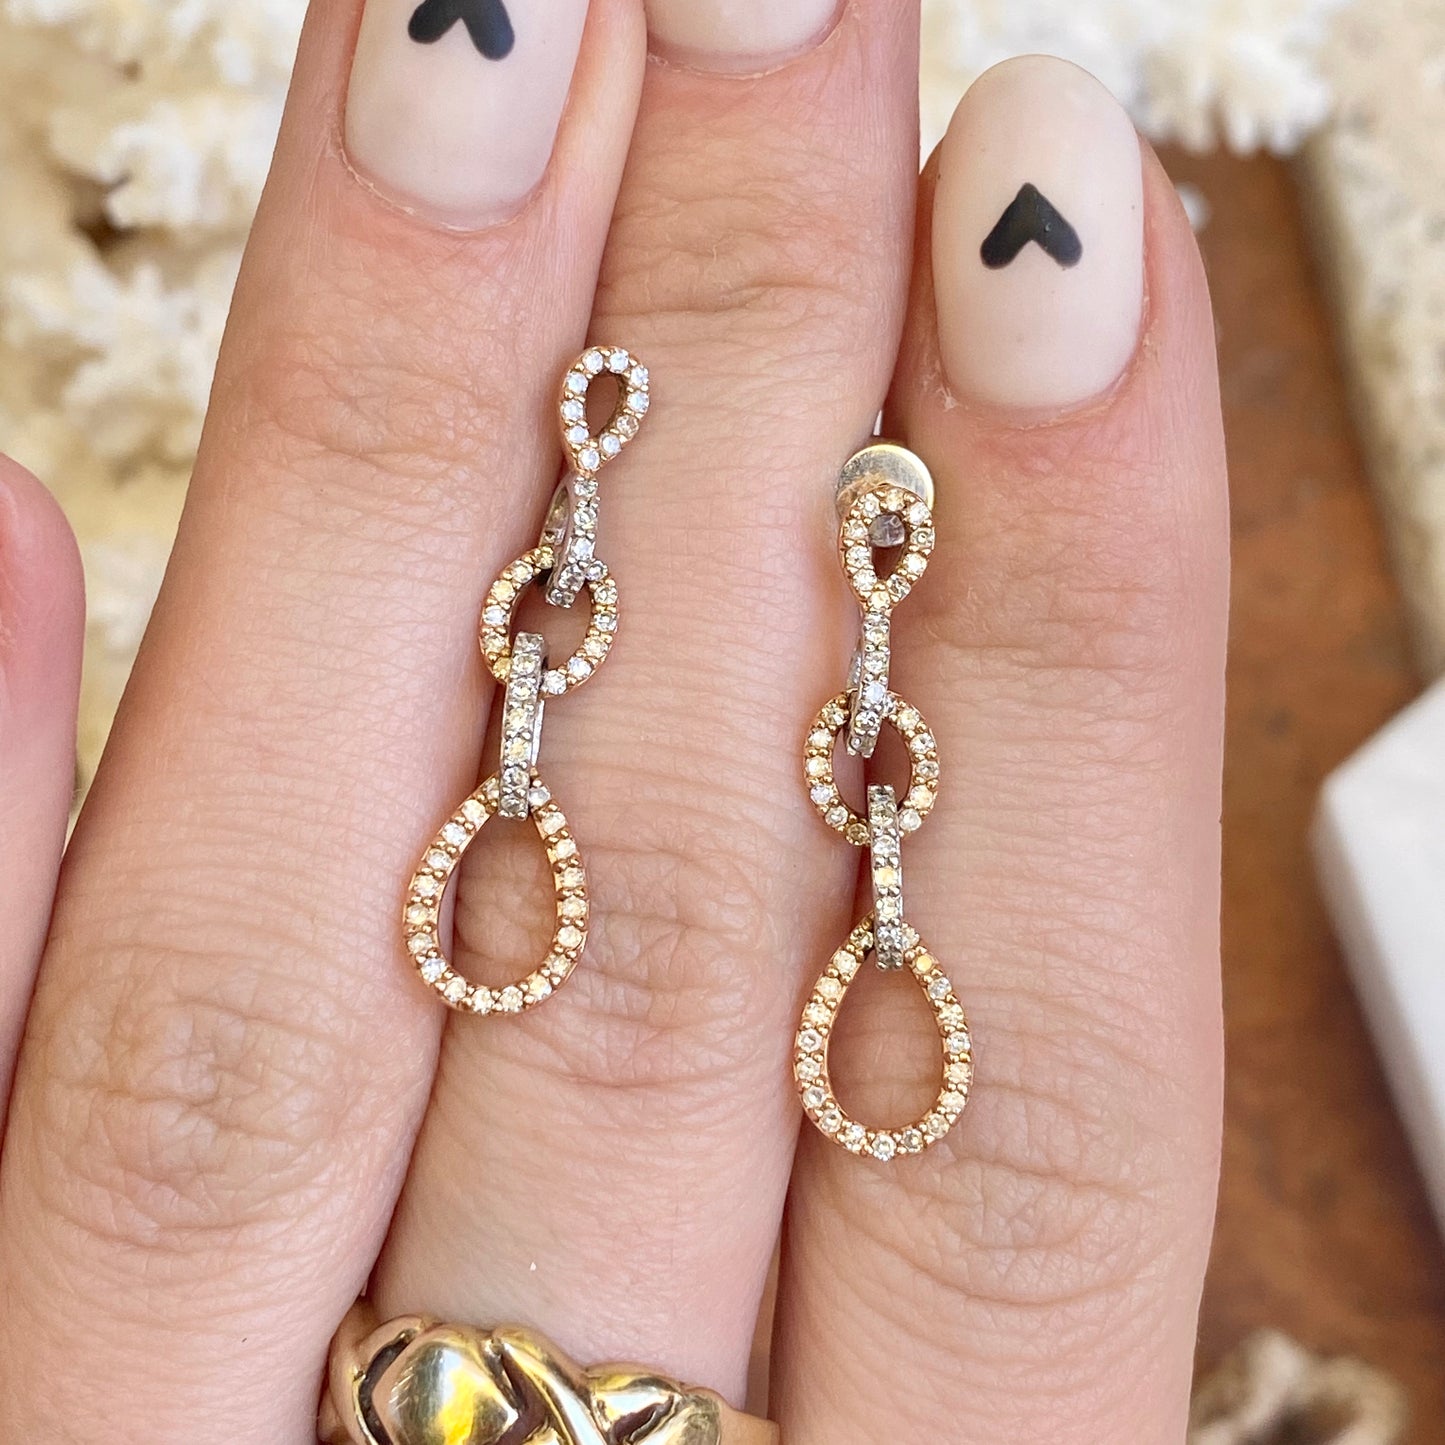 14KT White Gold + Rose Gold Pave Diamond Interlocking Circle Earrings - Legacy Saint Jewelry